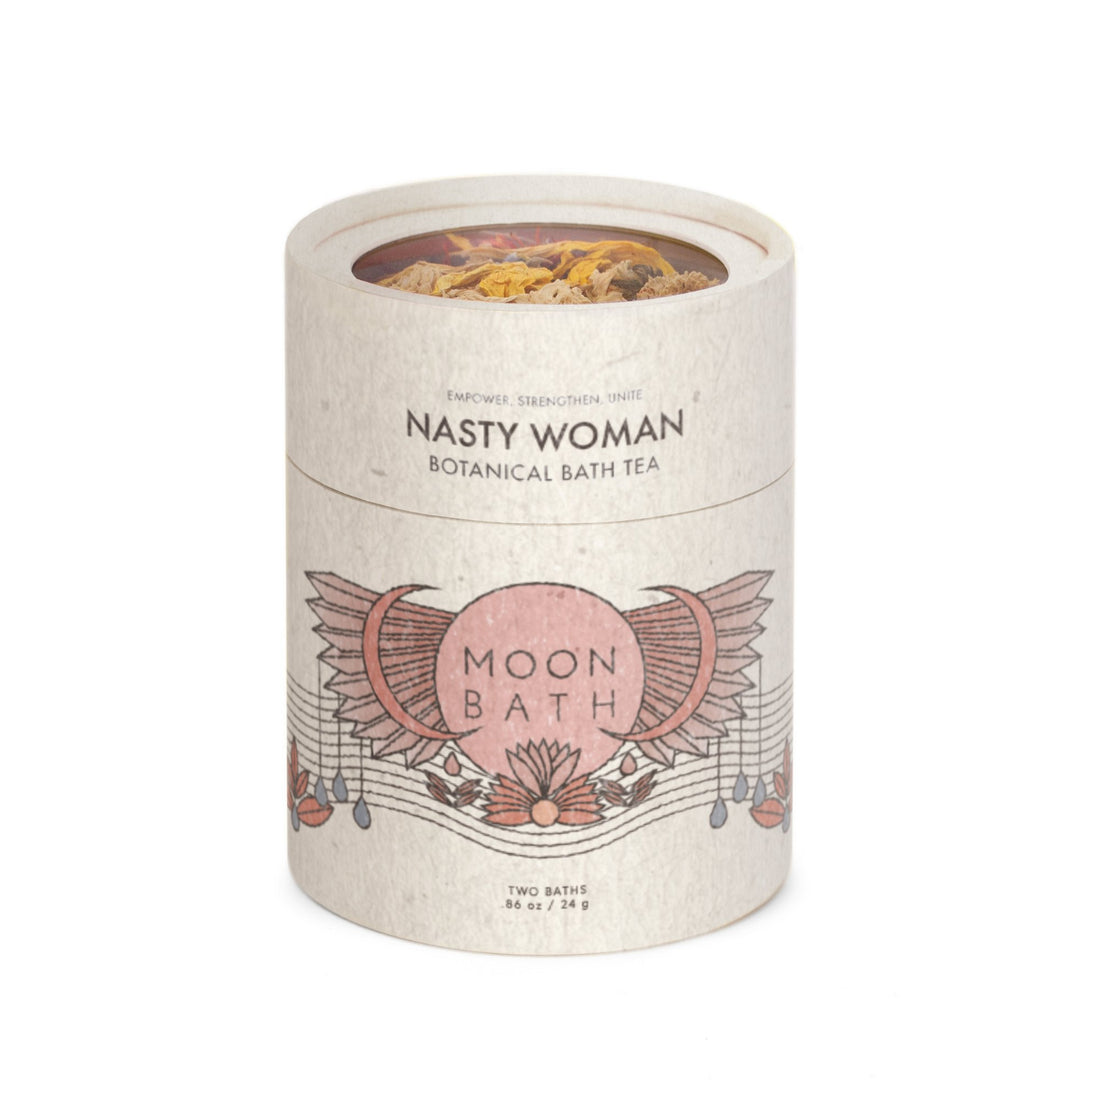 Moon Bath | NASTY WOMAN | Botanical Bath Tea - Eventide Botanical Wellness